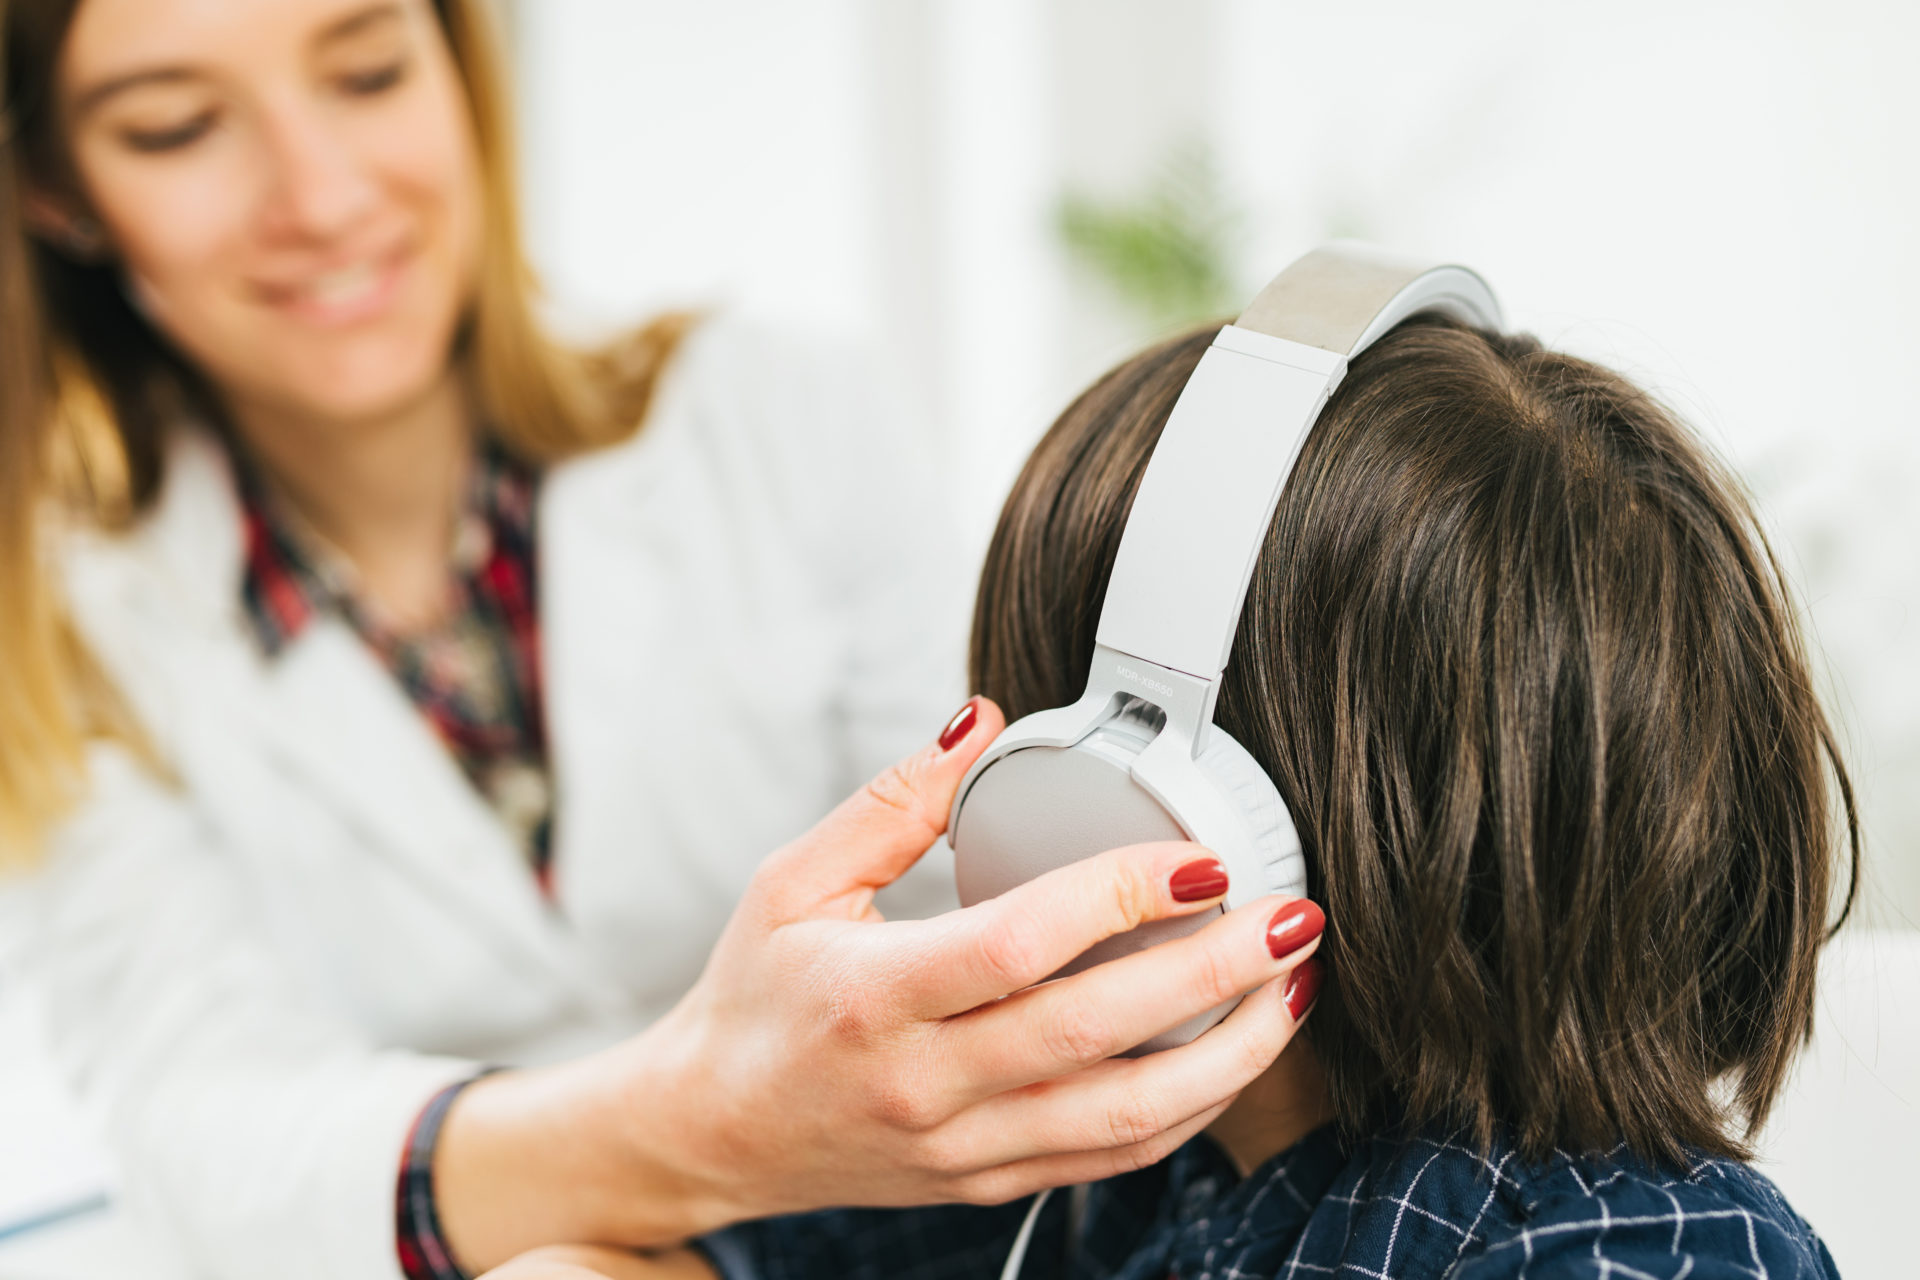 Hearing Test for Children - Boy Wearing Headphones, Having a Hearing Test